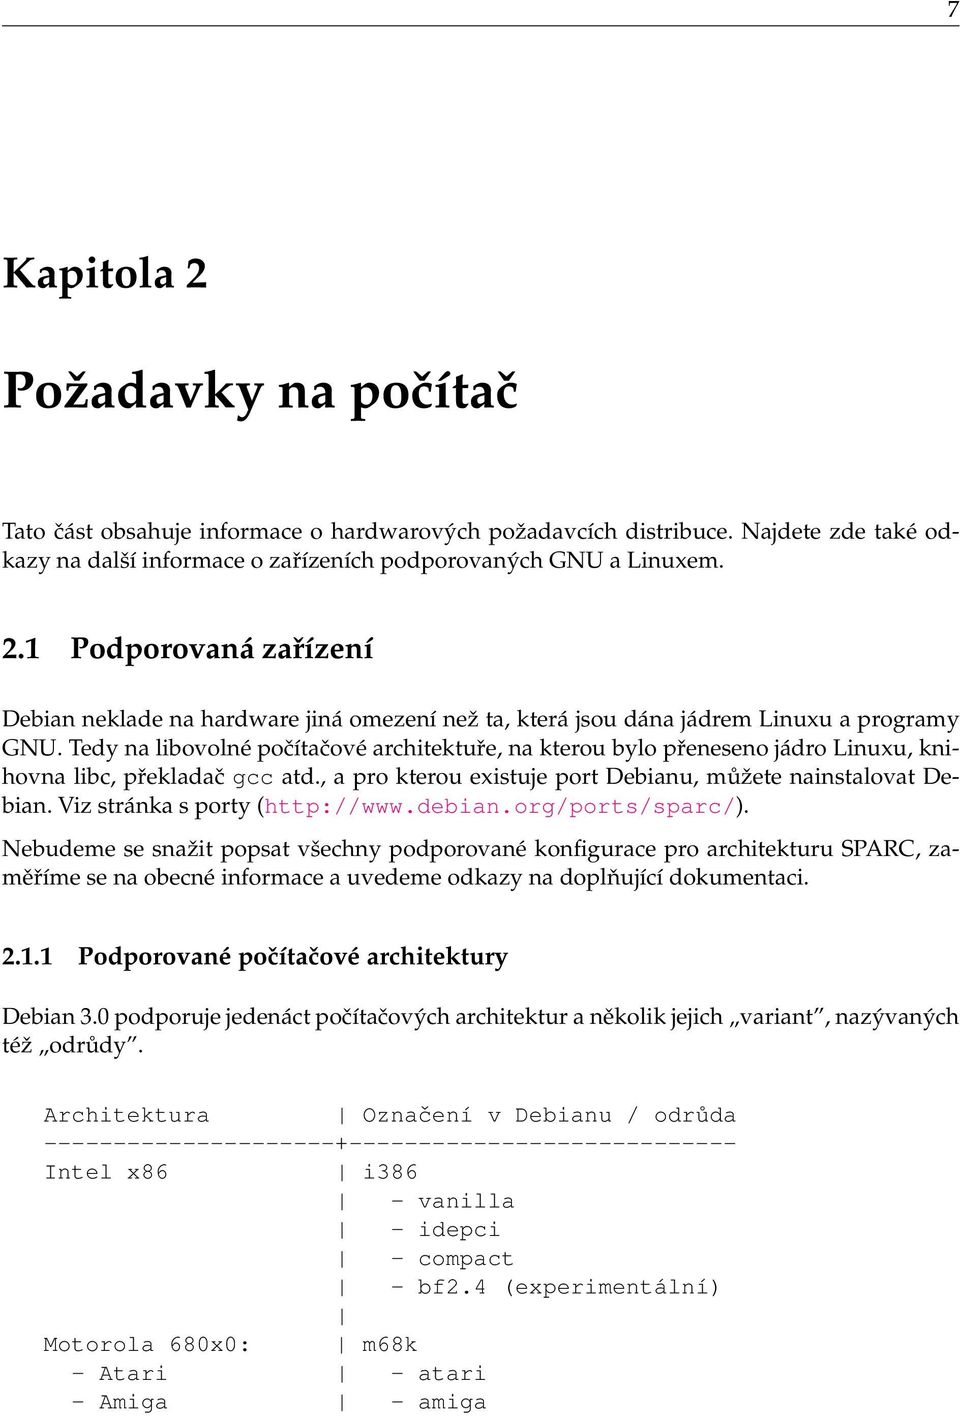 Viz stránka s porty (http://www.debian.org/ports/sparc/).